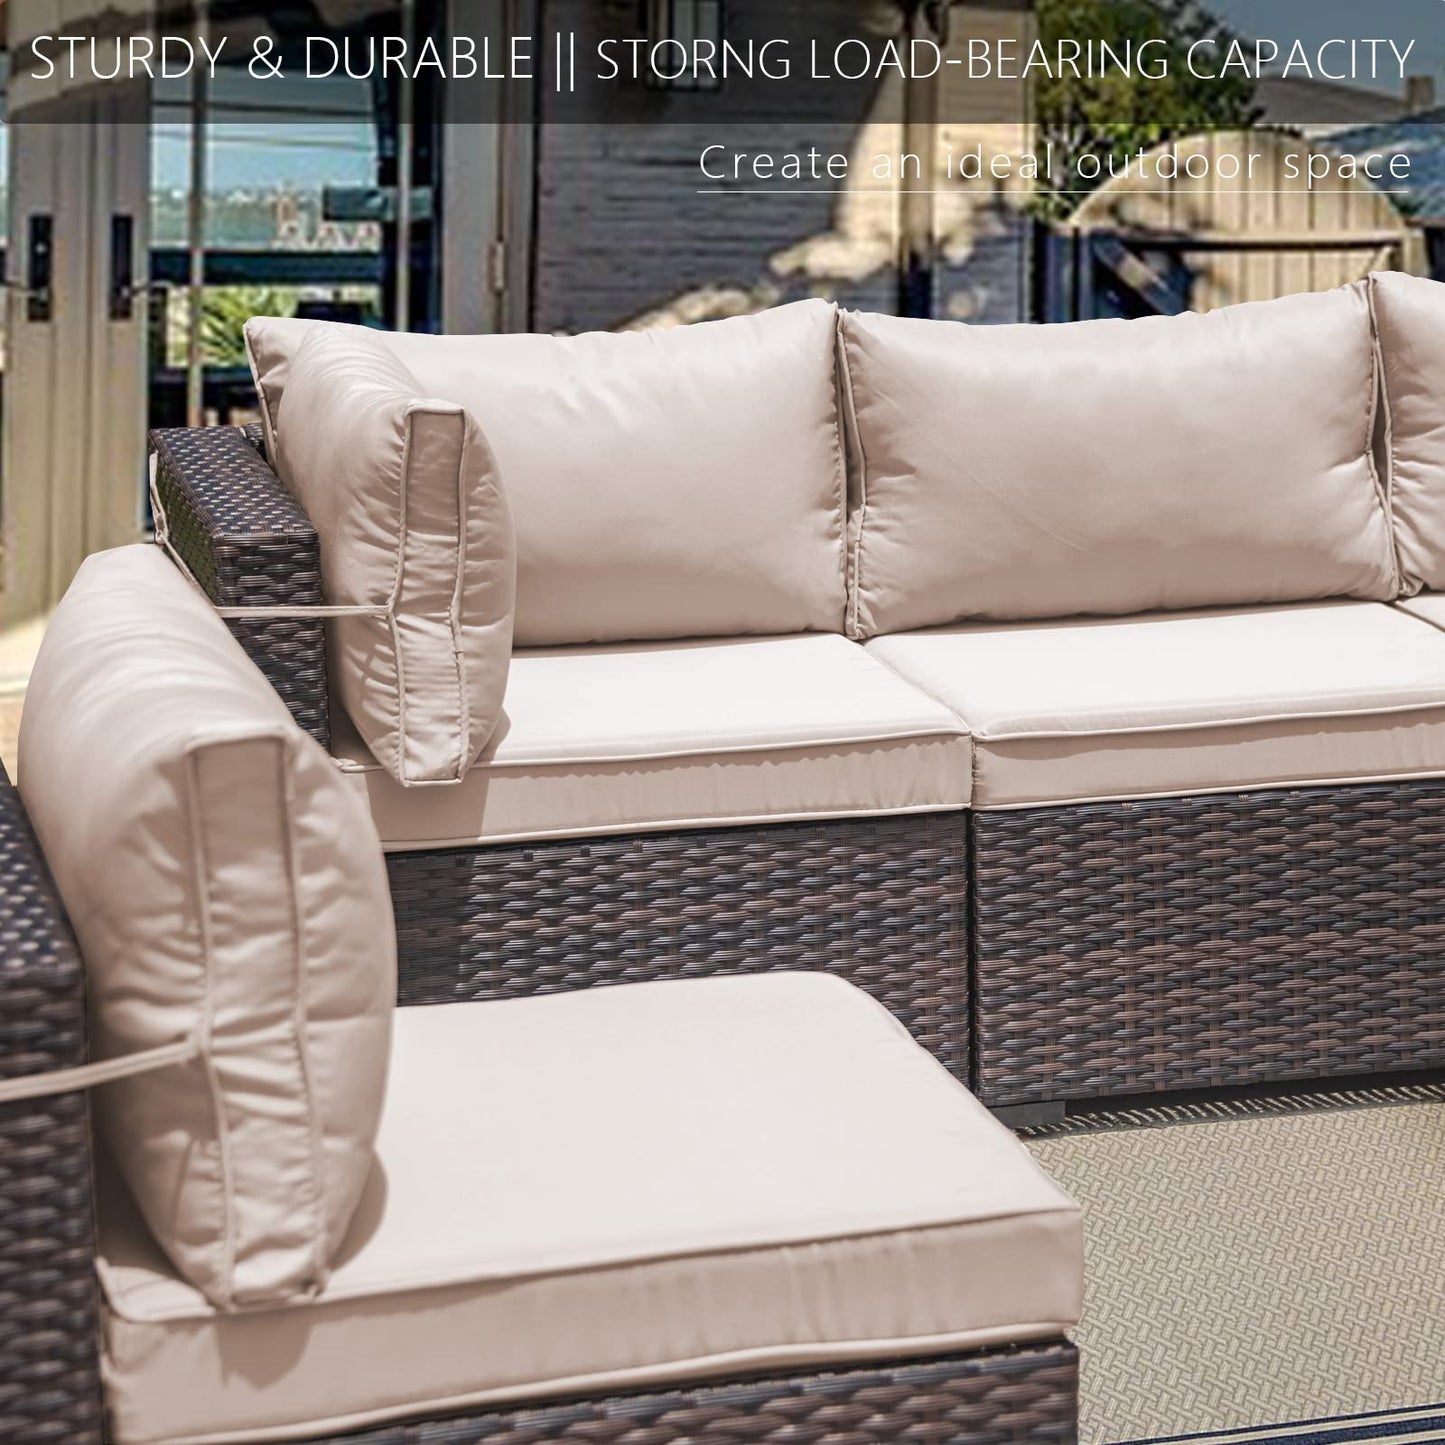 ALAULM 7 Piece Outdoor Patio Furniture Sets, Patio Sectional Sofa - Sand